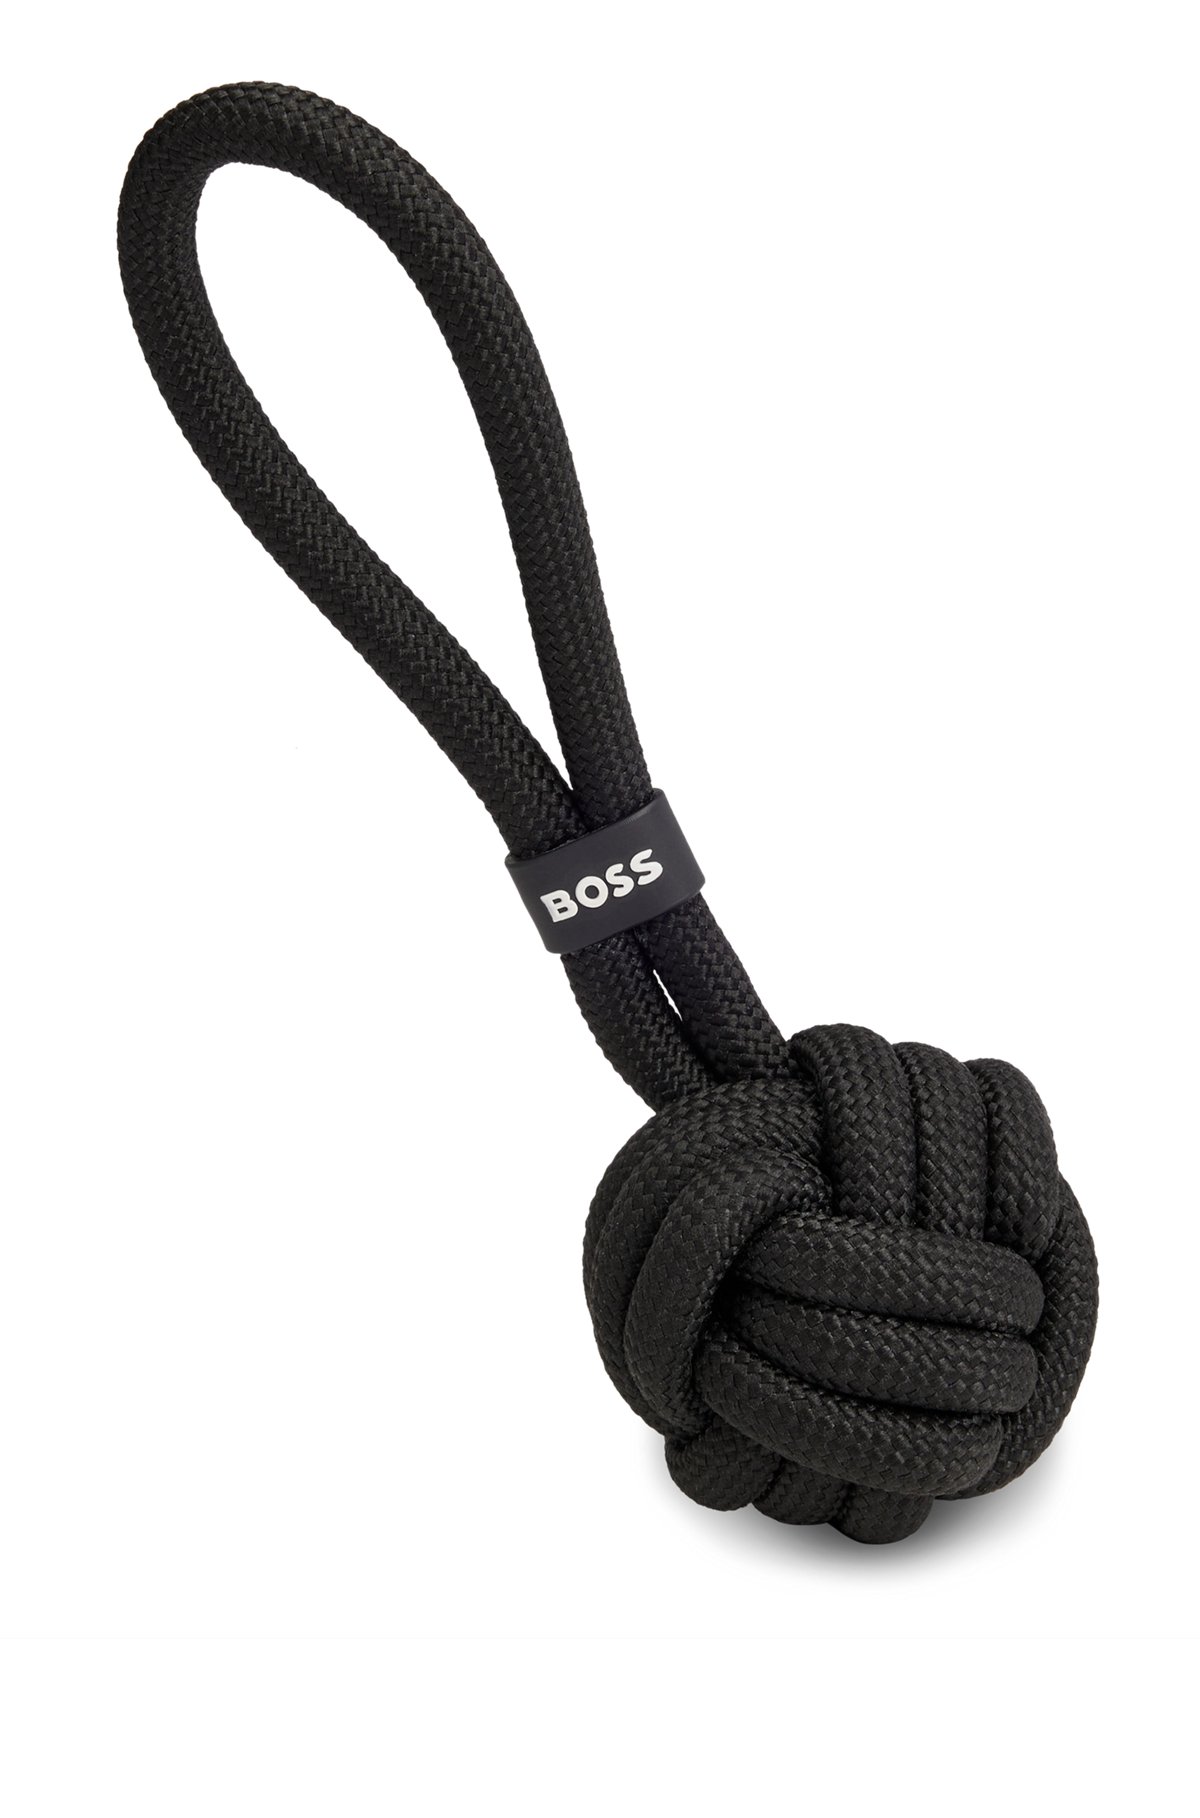 Dog rope ball toy, Black